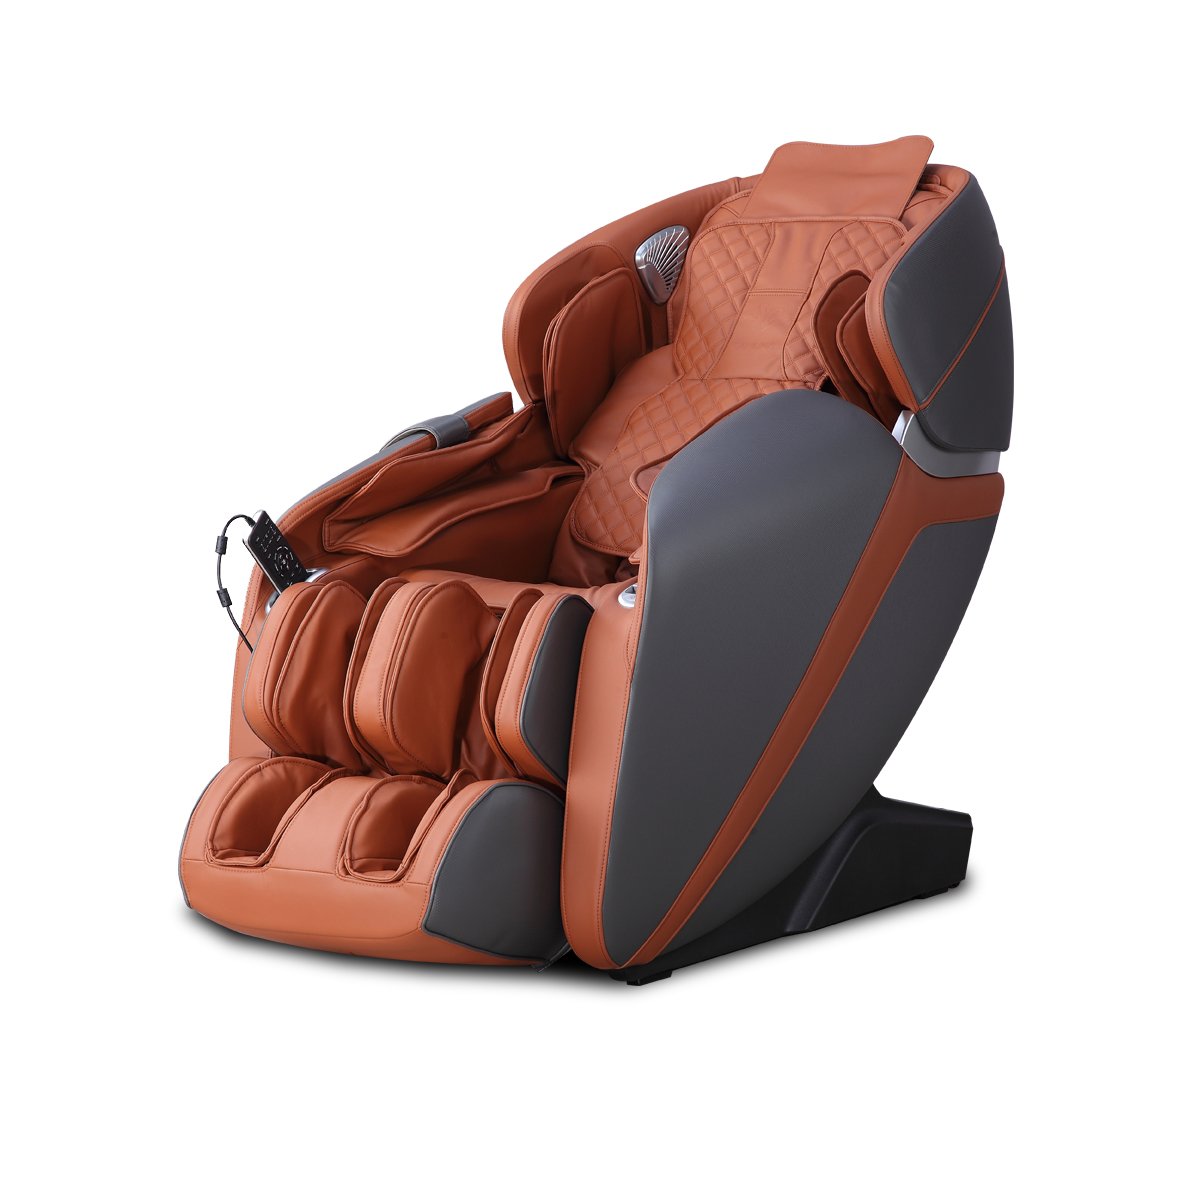 Kahuna LM7000 massage chair orange